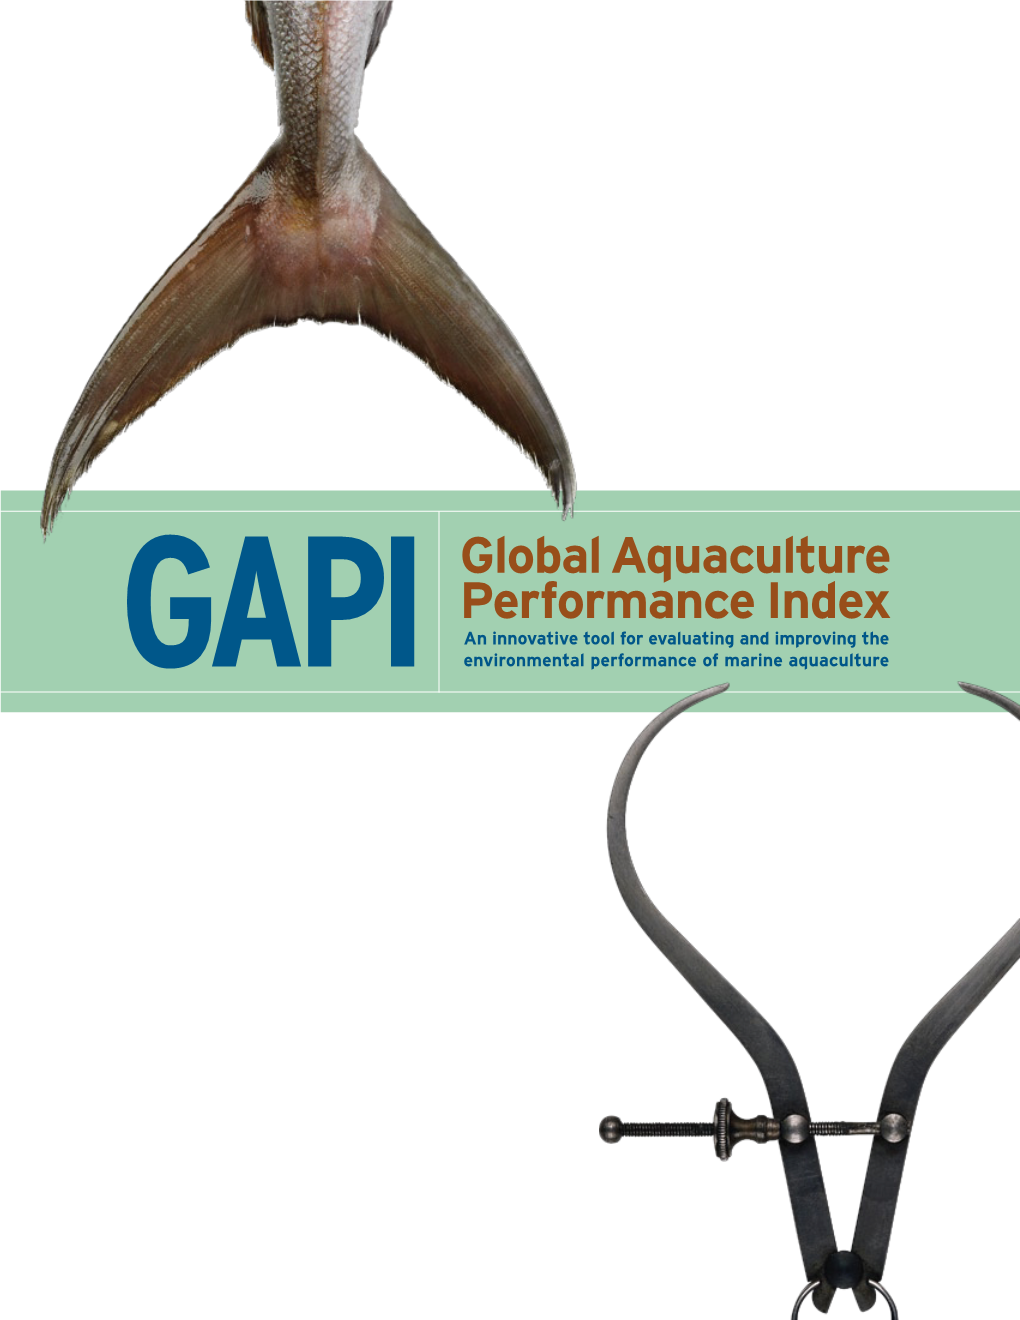 Gapiglobal Aquaculture Performance Index